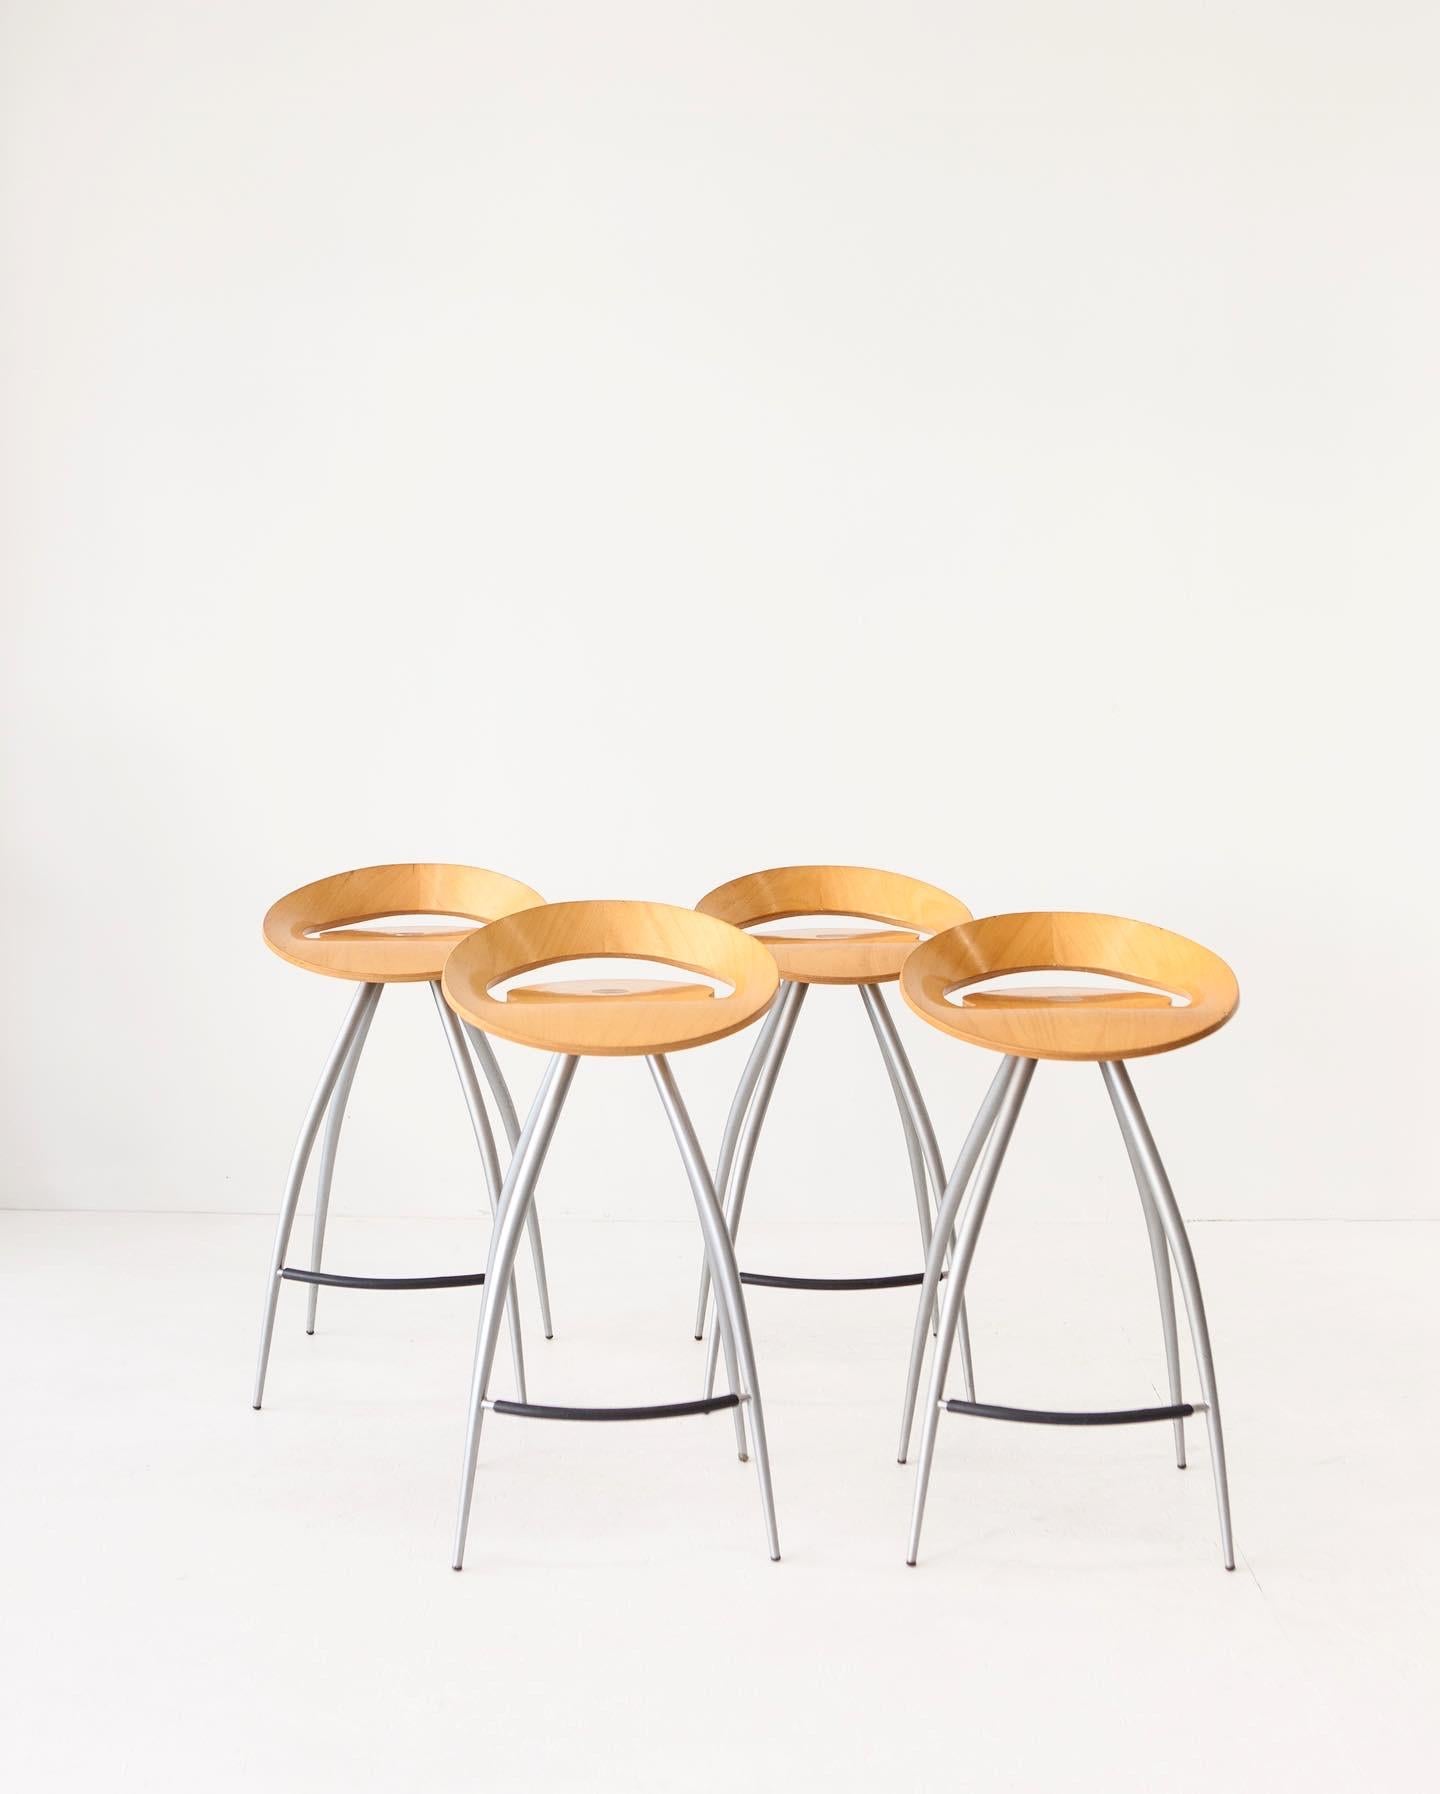 Post-Modern Lyra stools by Design Group Italia for Magis